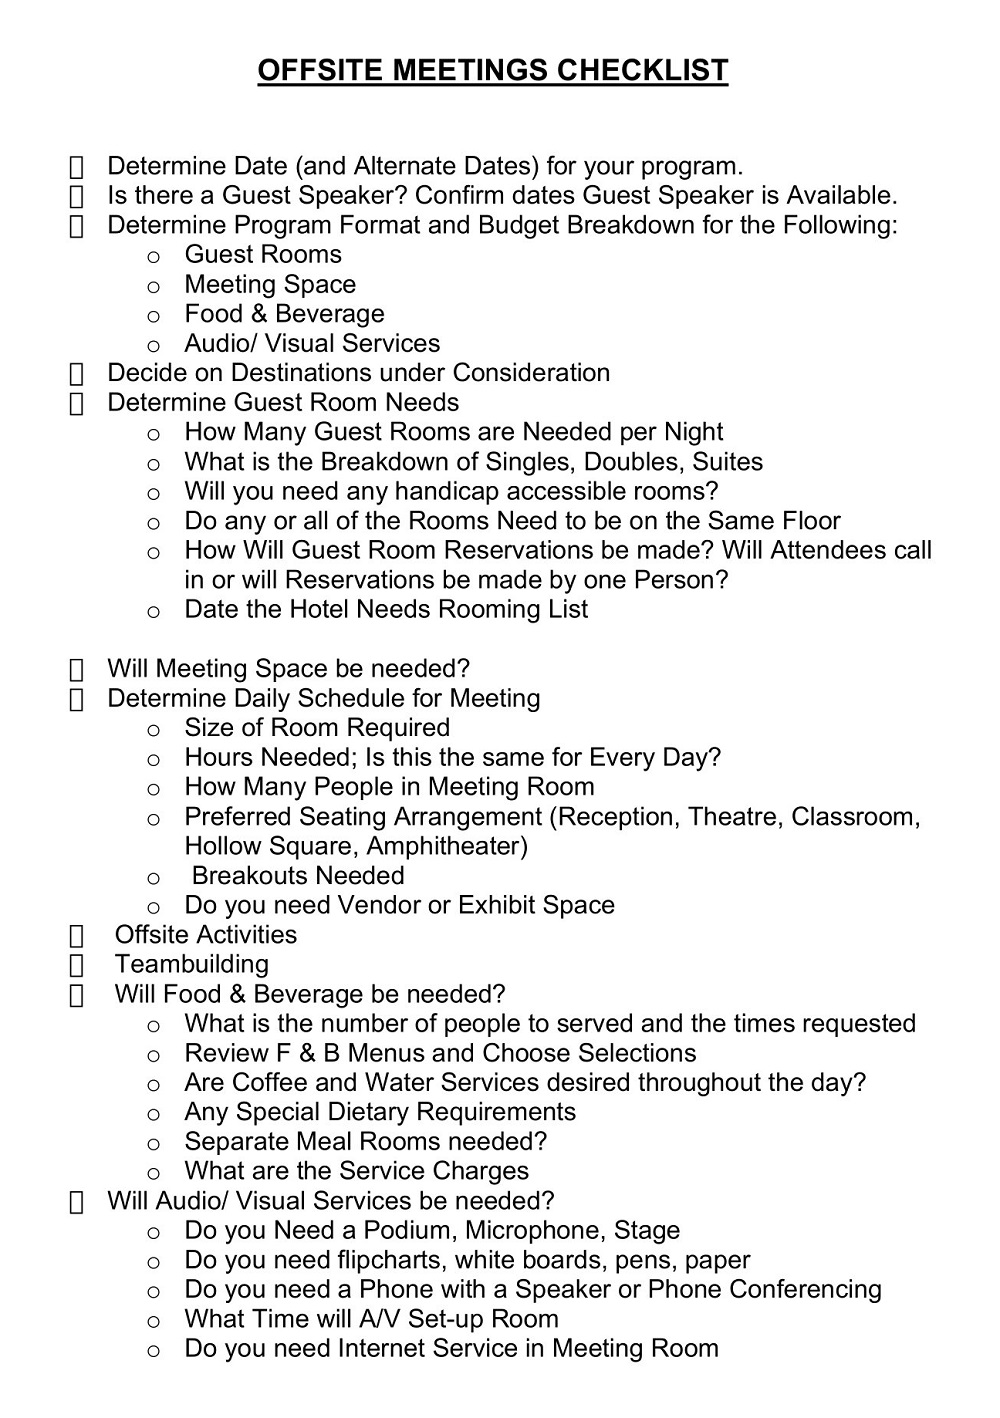 Offsite Meeting Checklist Template